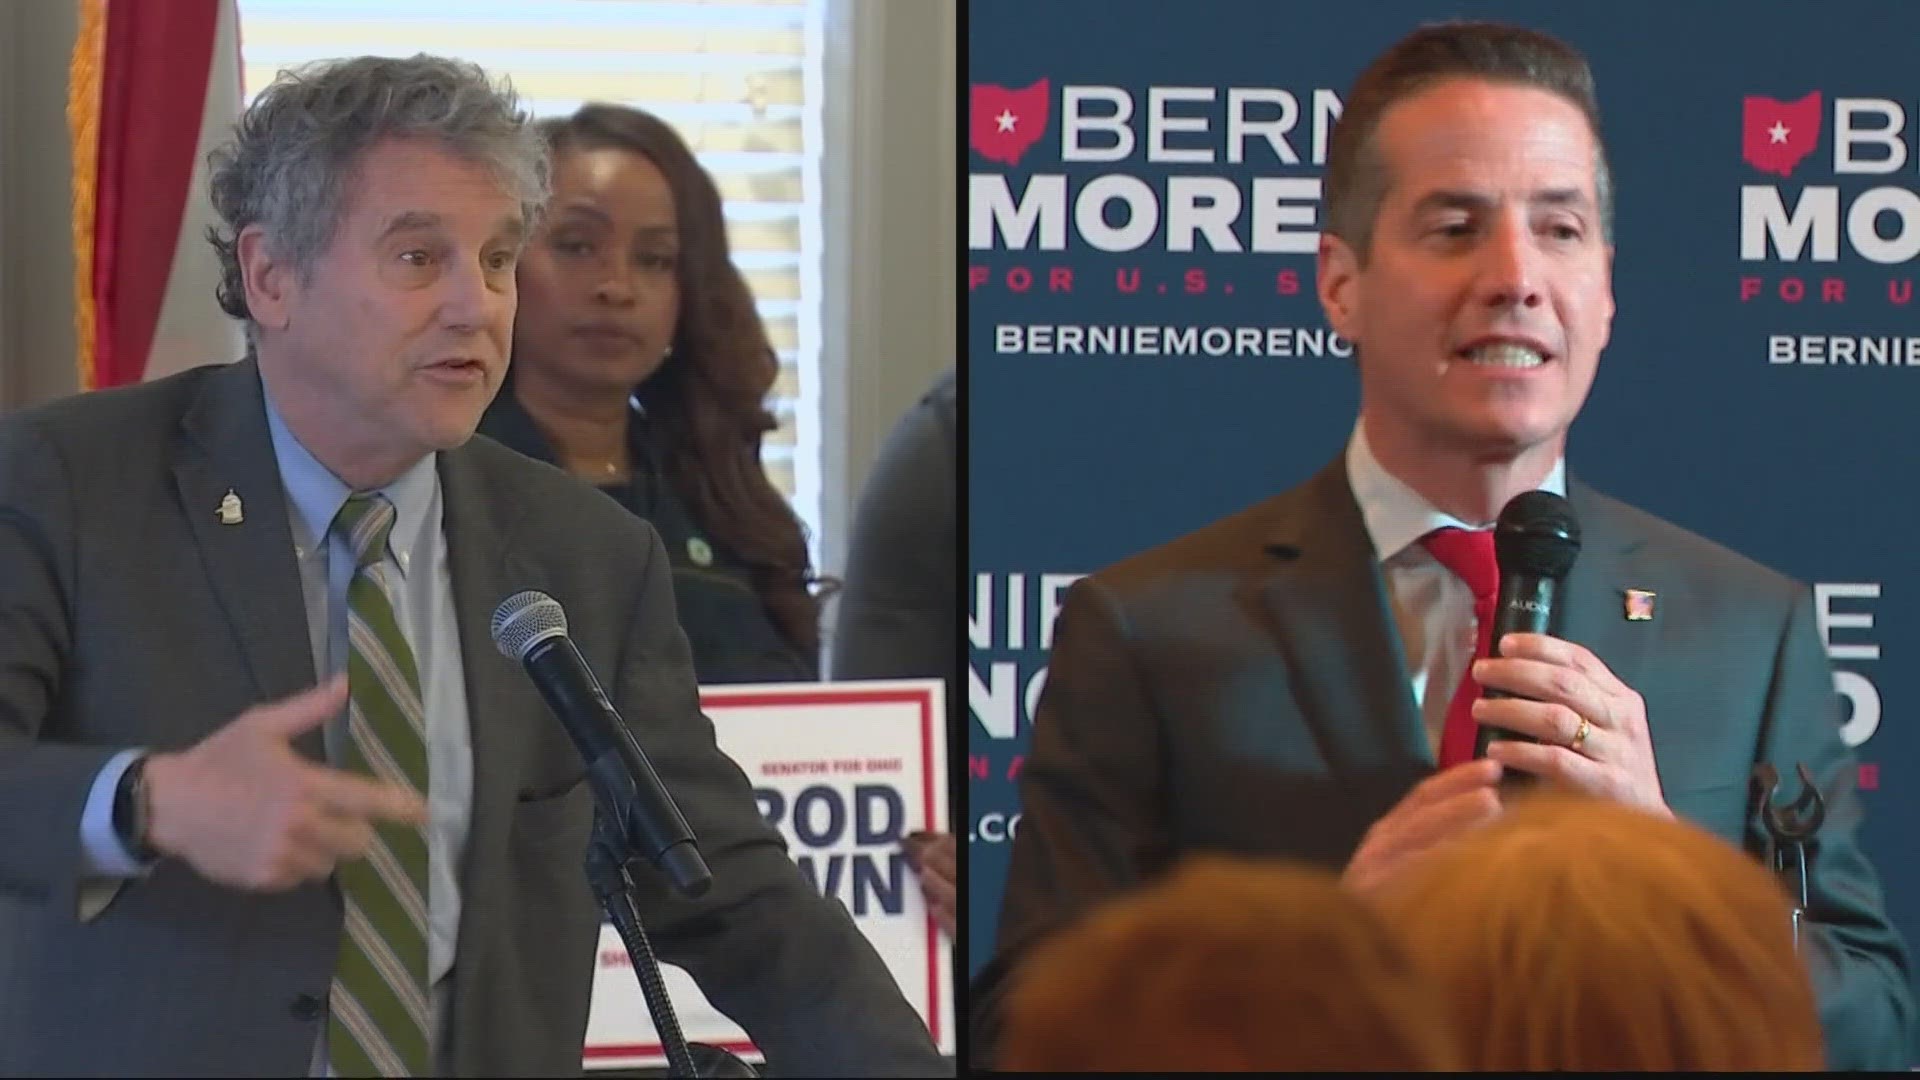 Cleveland businessman Bernie Moreno won Ohio’s Republican Senate primary on Tuesday, defeating Matt Dolan and Frank LaRose.